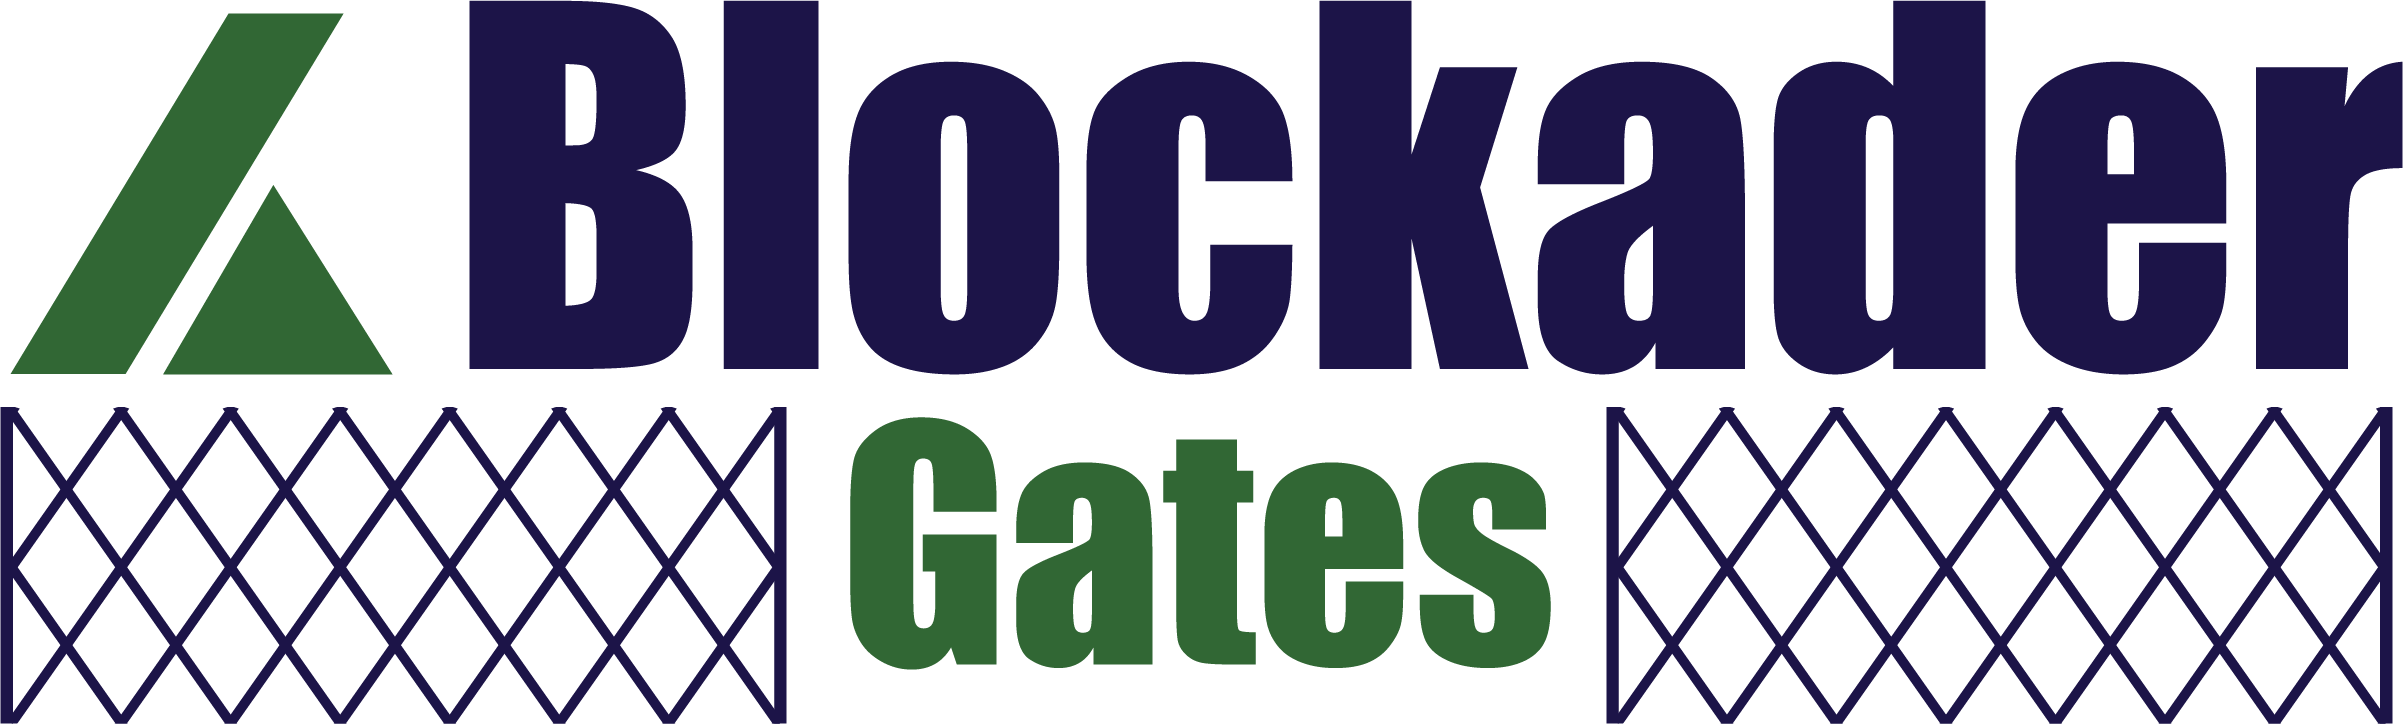 Blockader Gates Logo